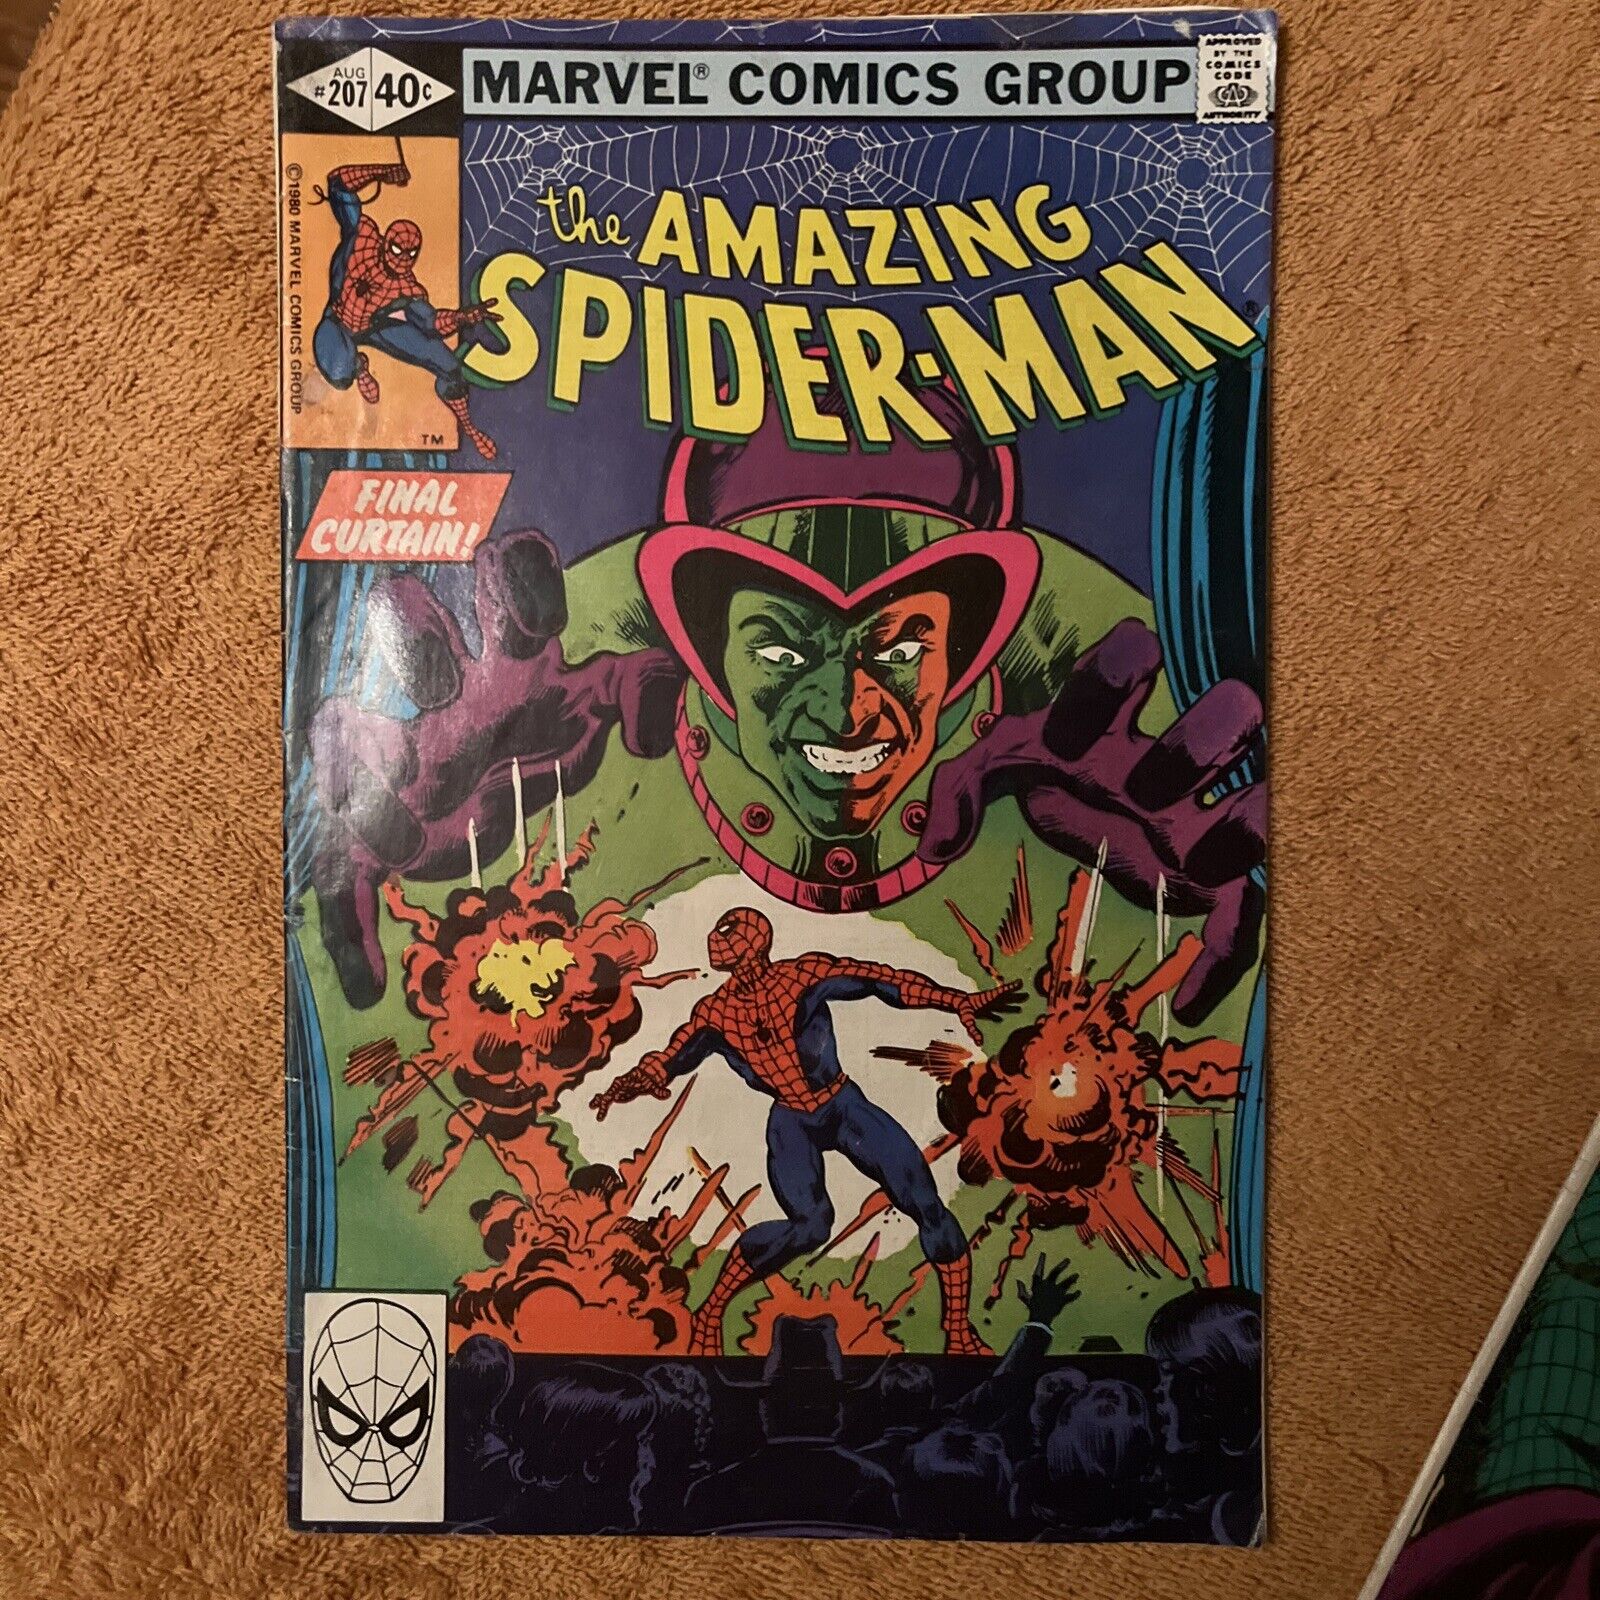 The Amazing Spider-Man #207 (Marvel Comics August 1980)